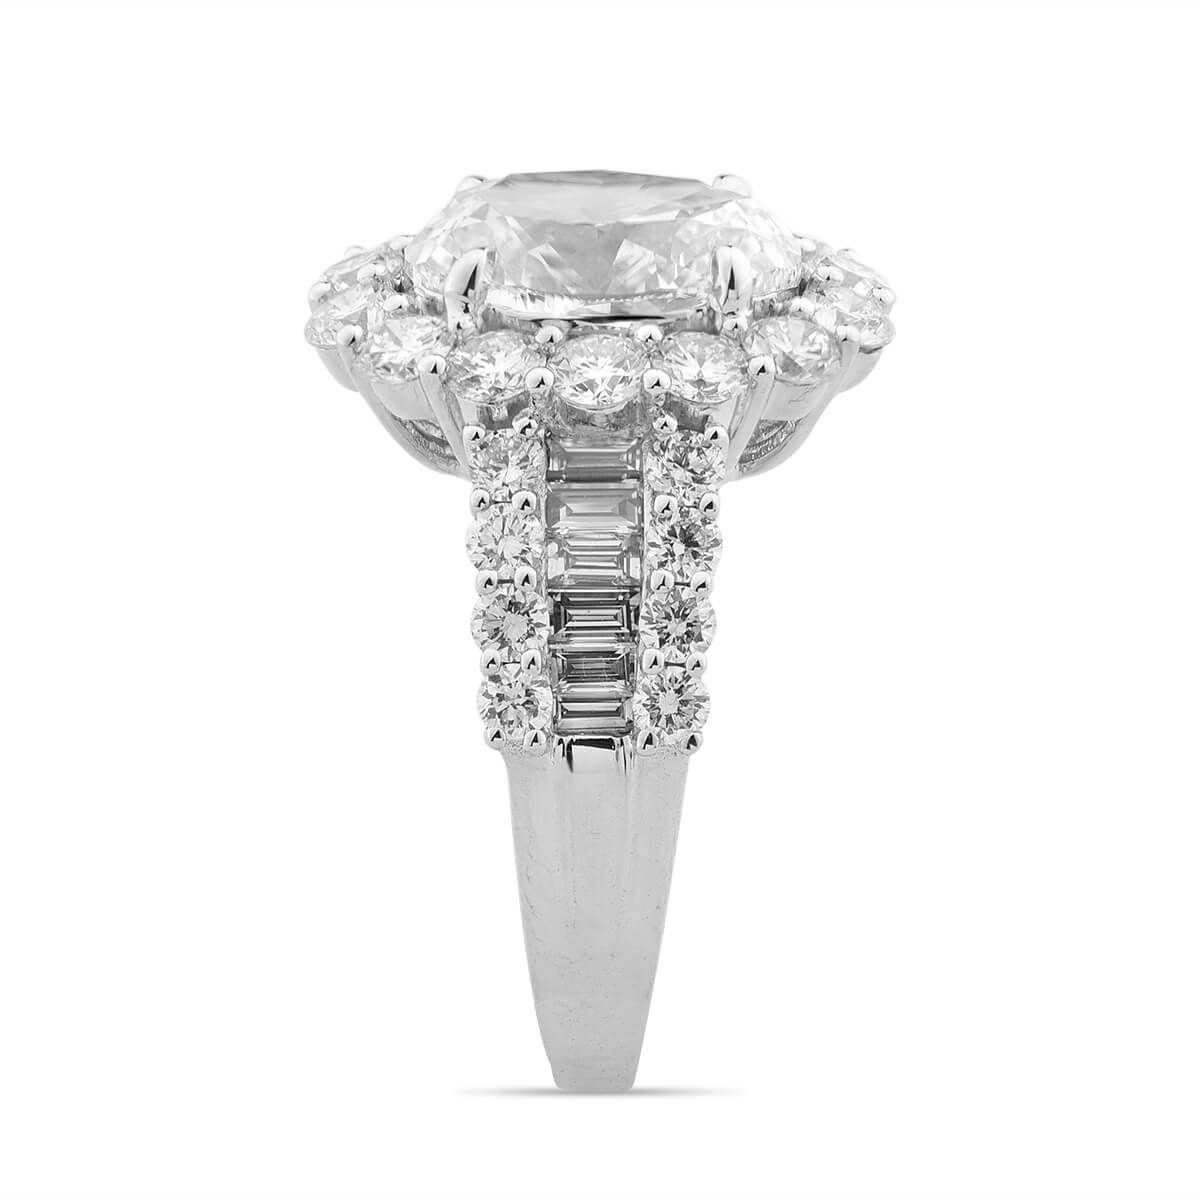  White Diamond Ring, 5.16 Ct. TW, Oval shape, GIA Certified, 5151582481